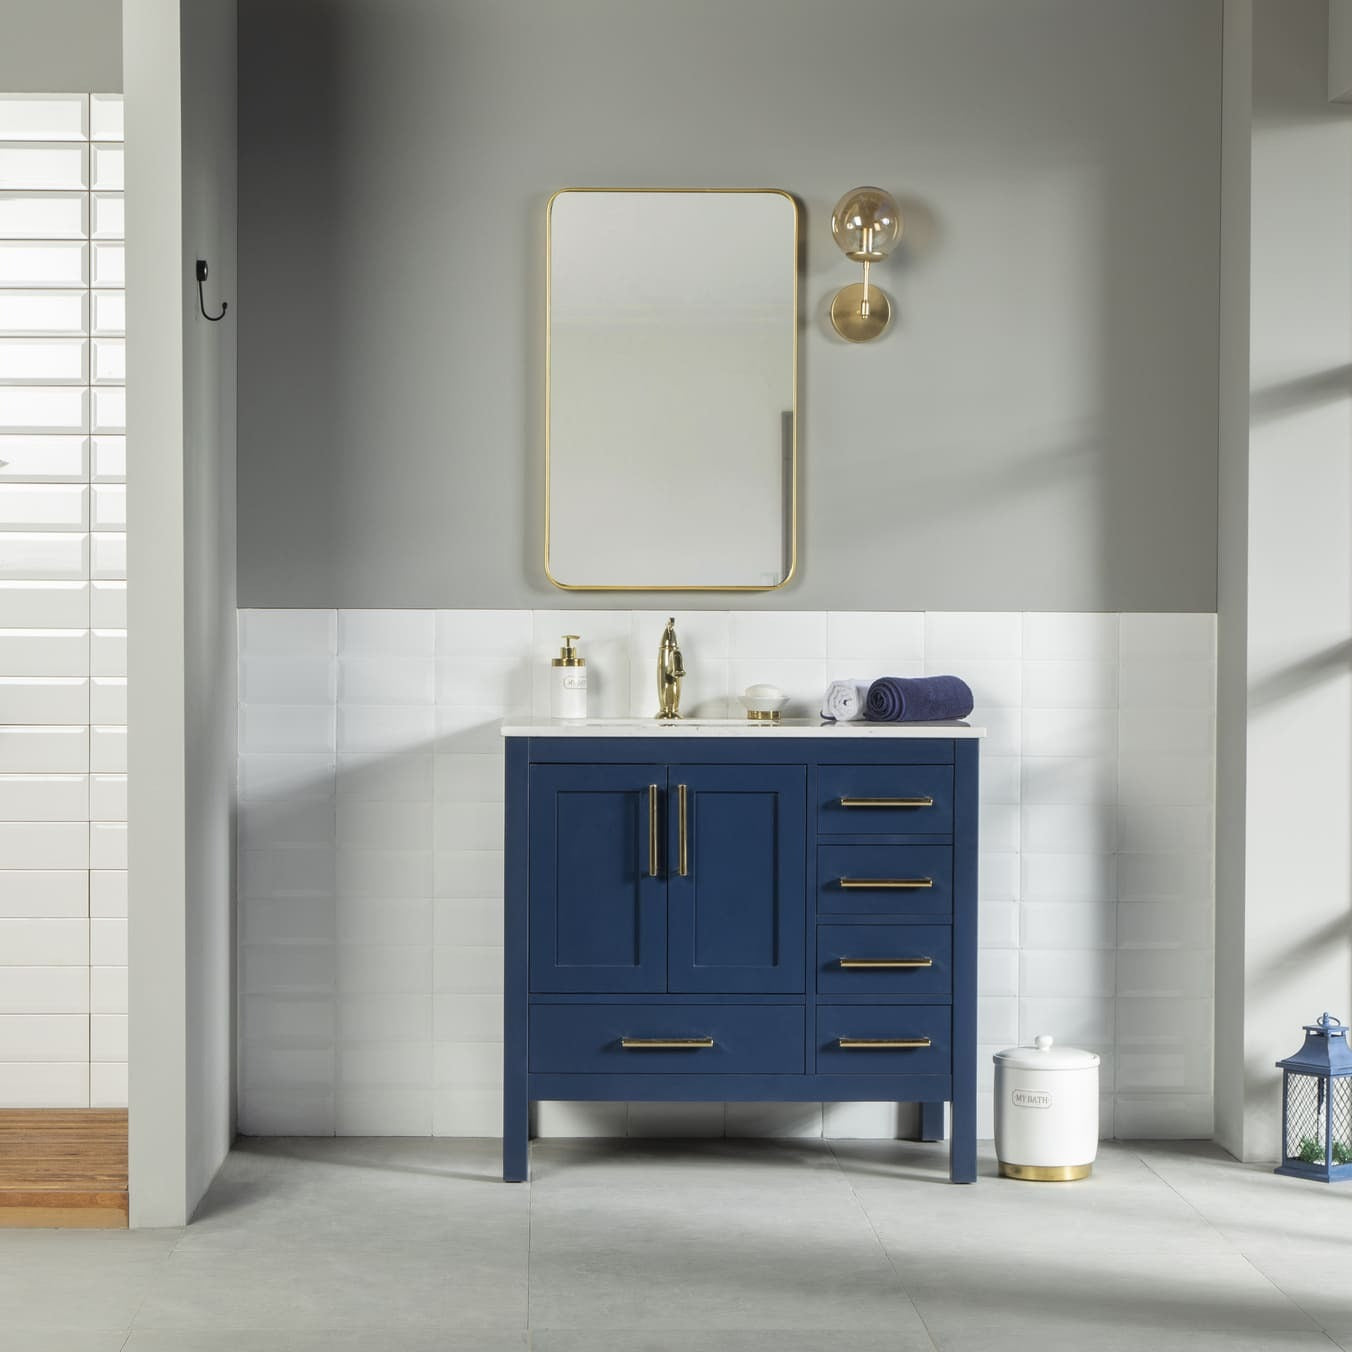 Ahley Bathroom Vanity Homelero 36"  #size_36"  #color_blue  #hardware_brass